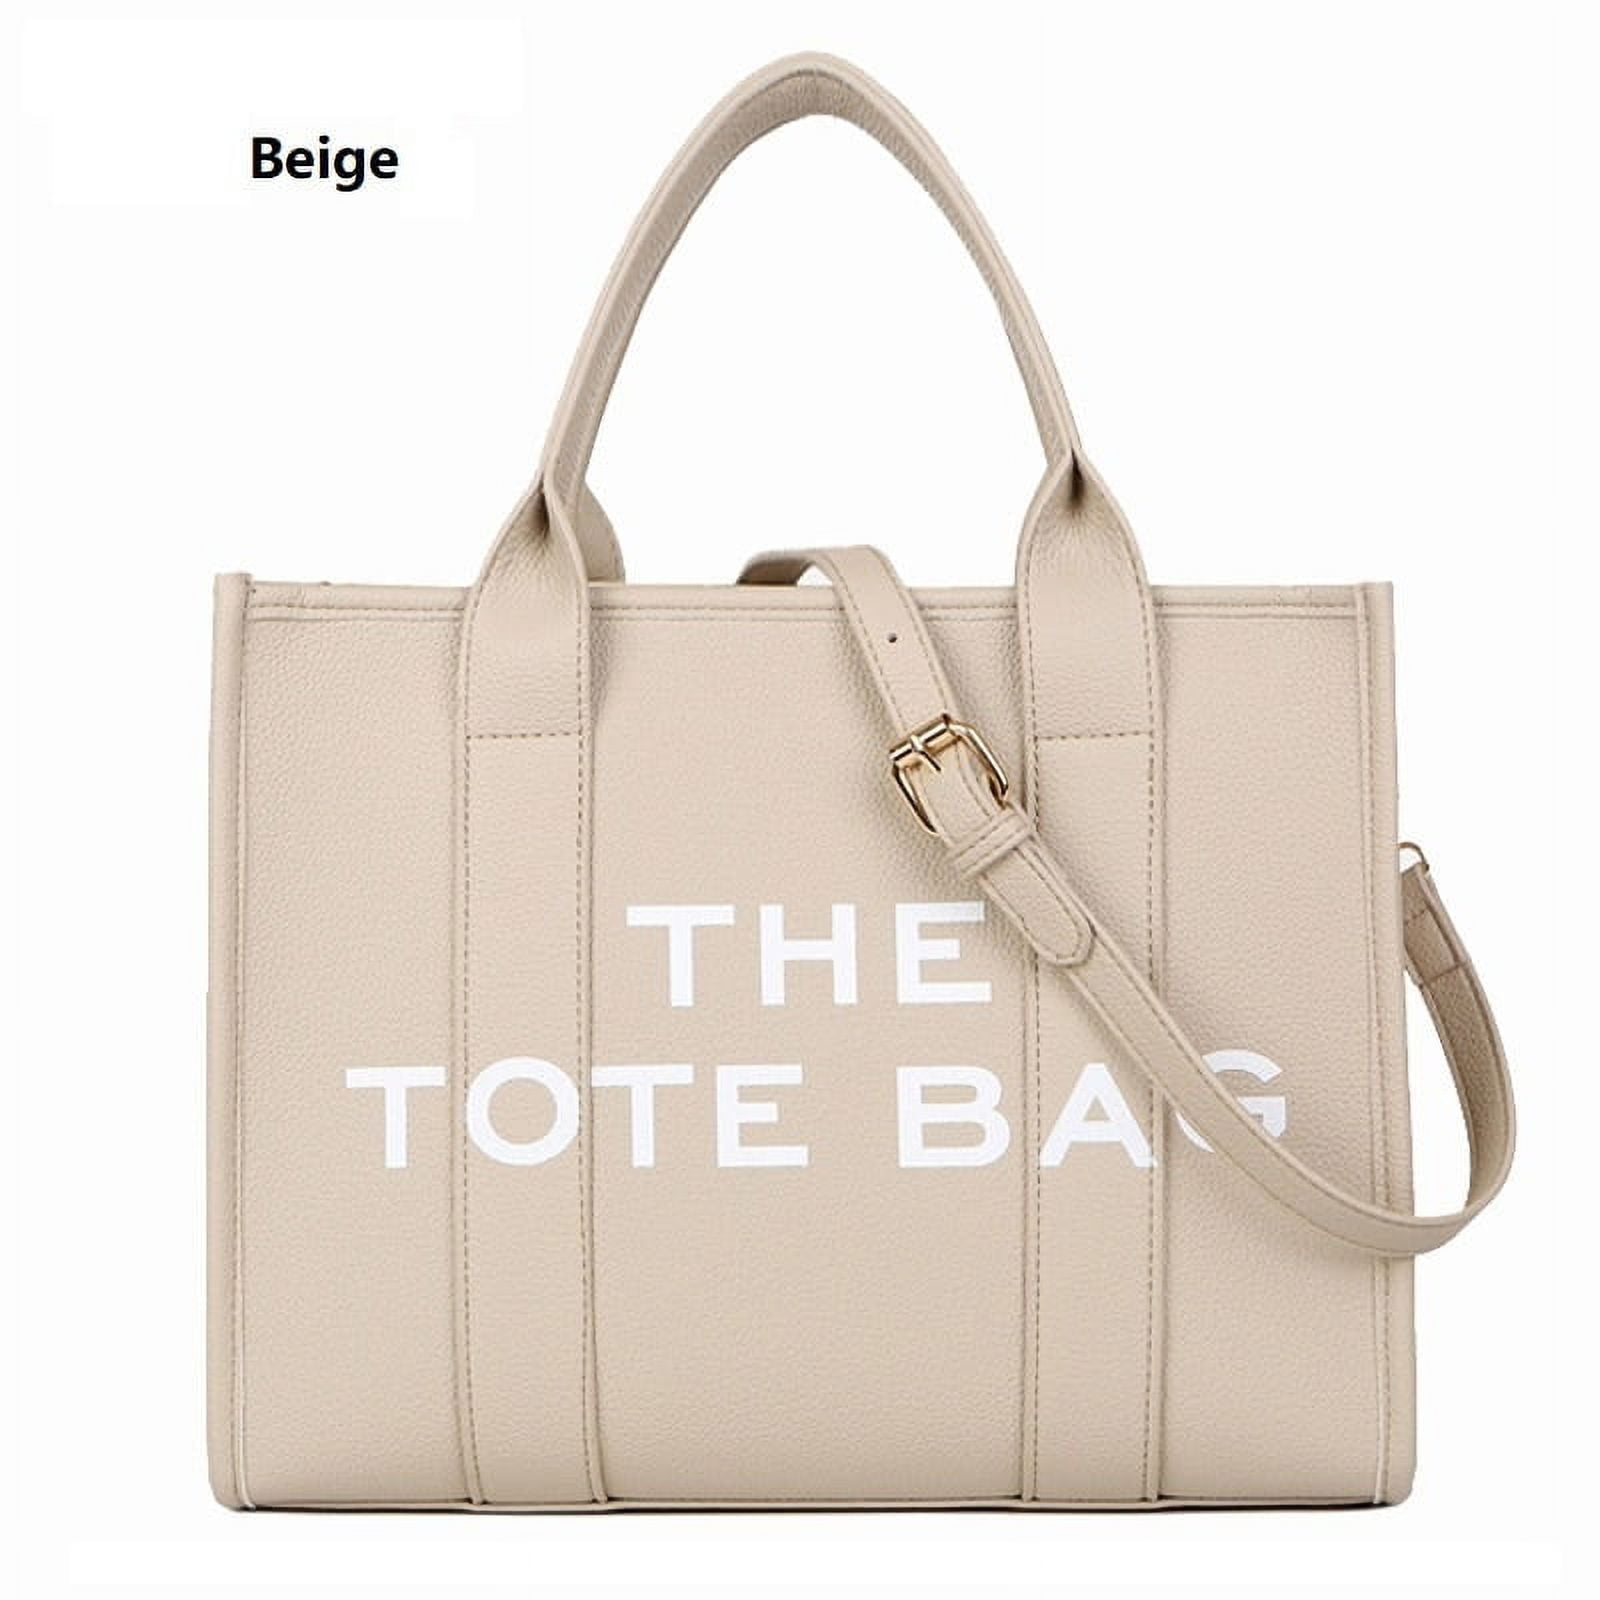 Buy Reaction Kenneth Cole Women's Satchel Handbag Beige at Amazon.in